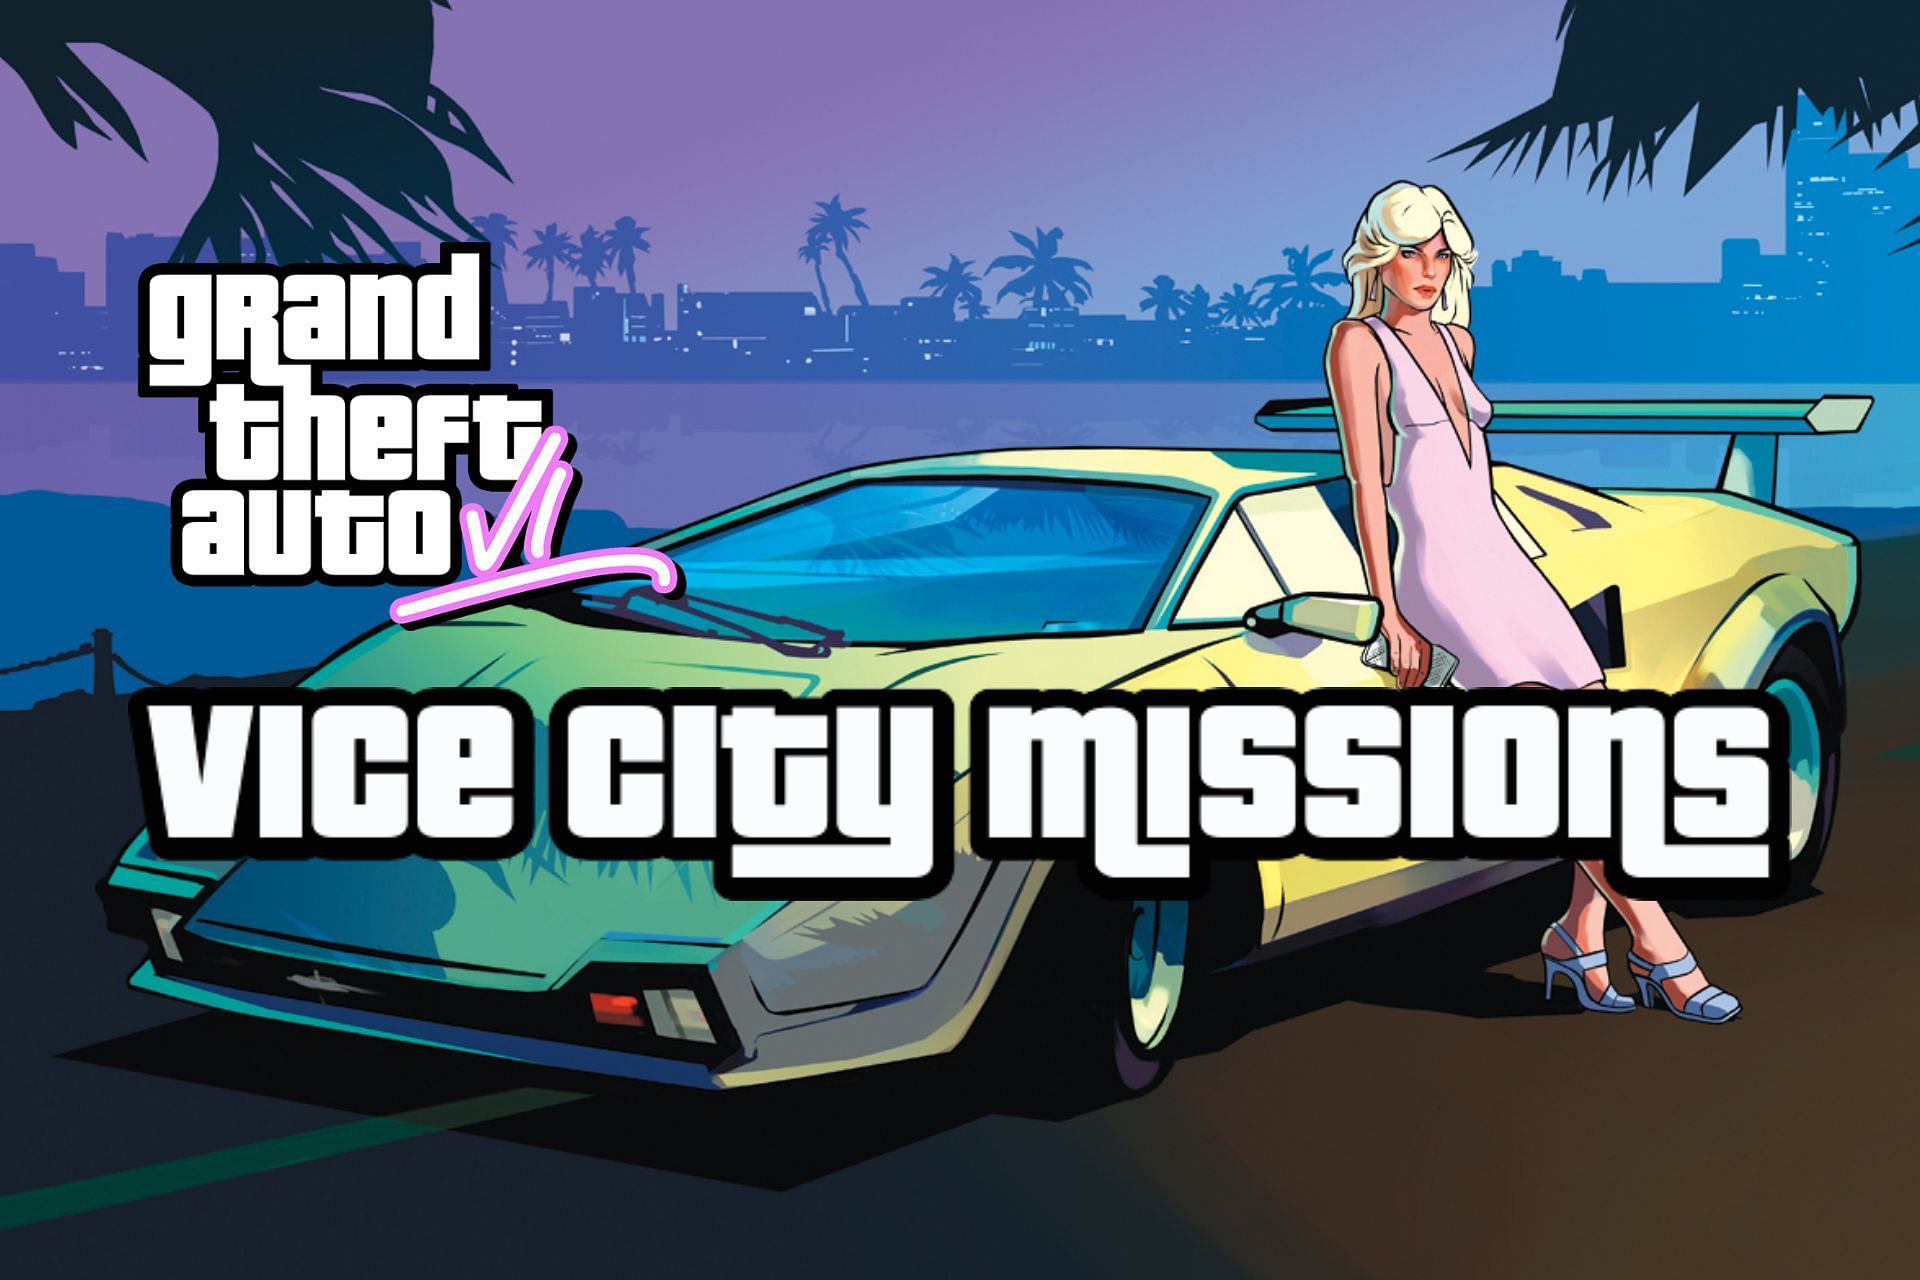 vice city mission